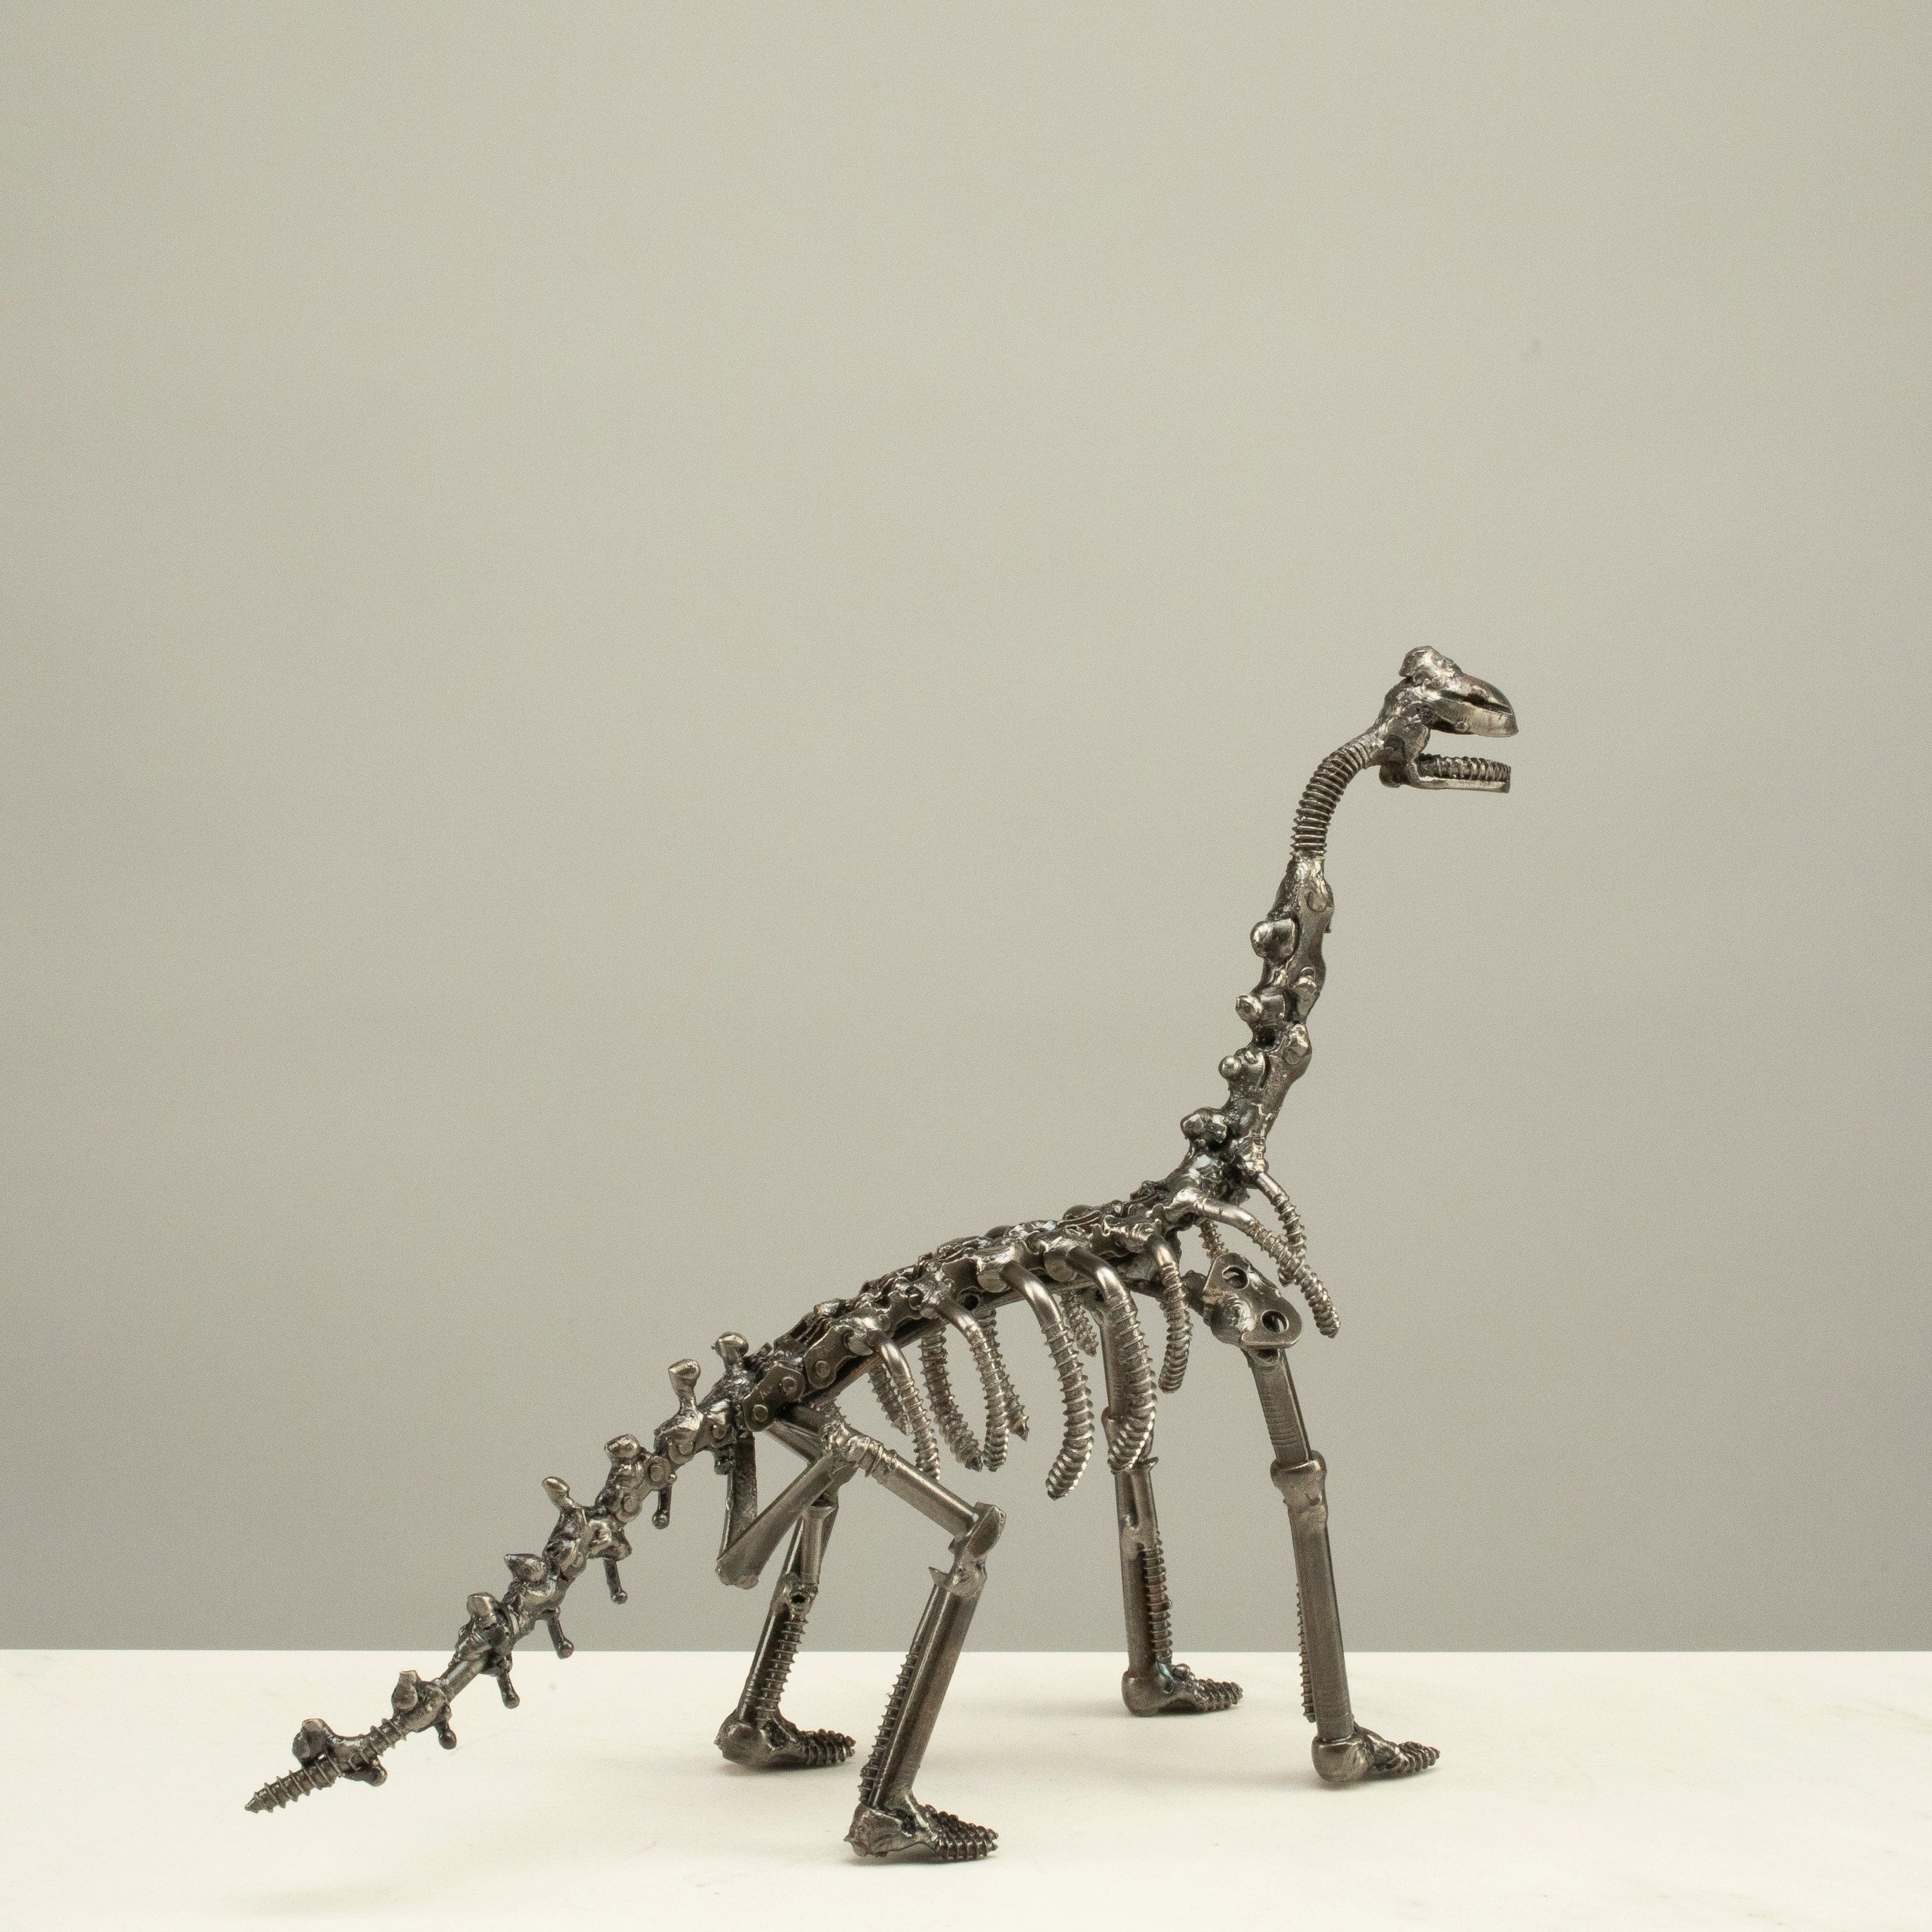 KALIFANO Recycled Metal Art Brachiosaurus Recycled Metal Sculpture RMS-300BRO-N